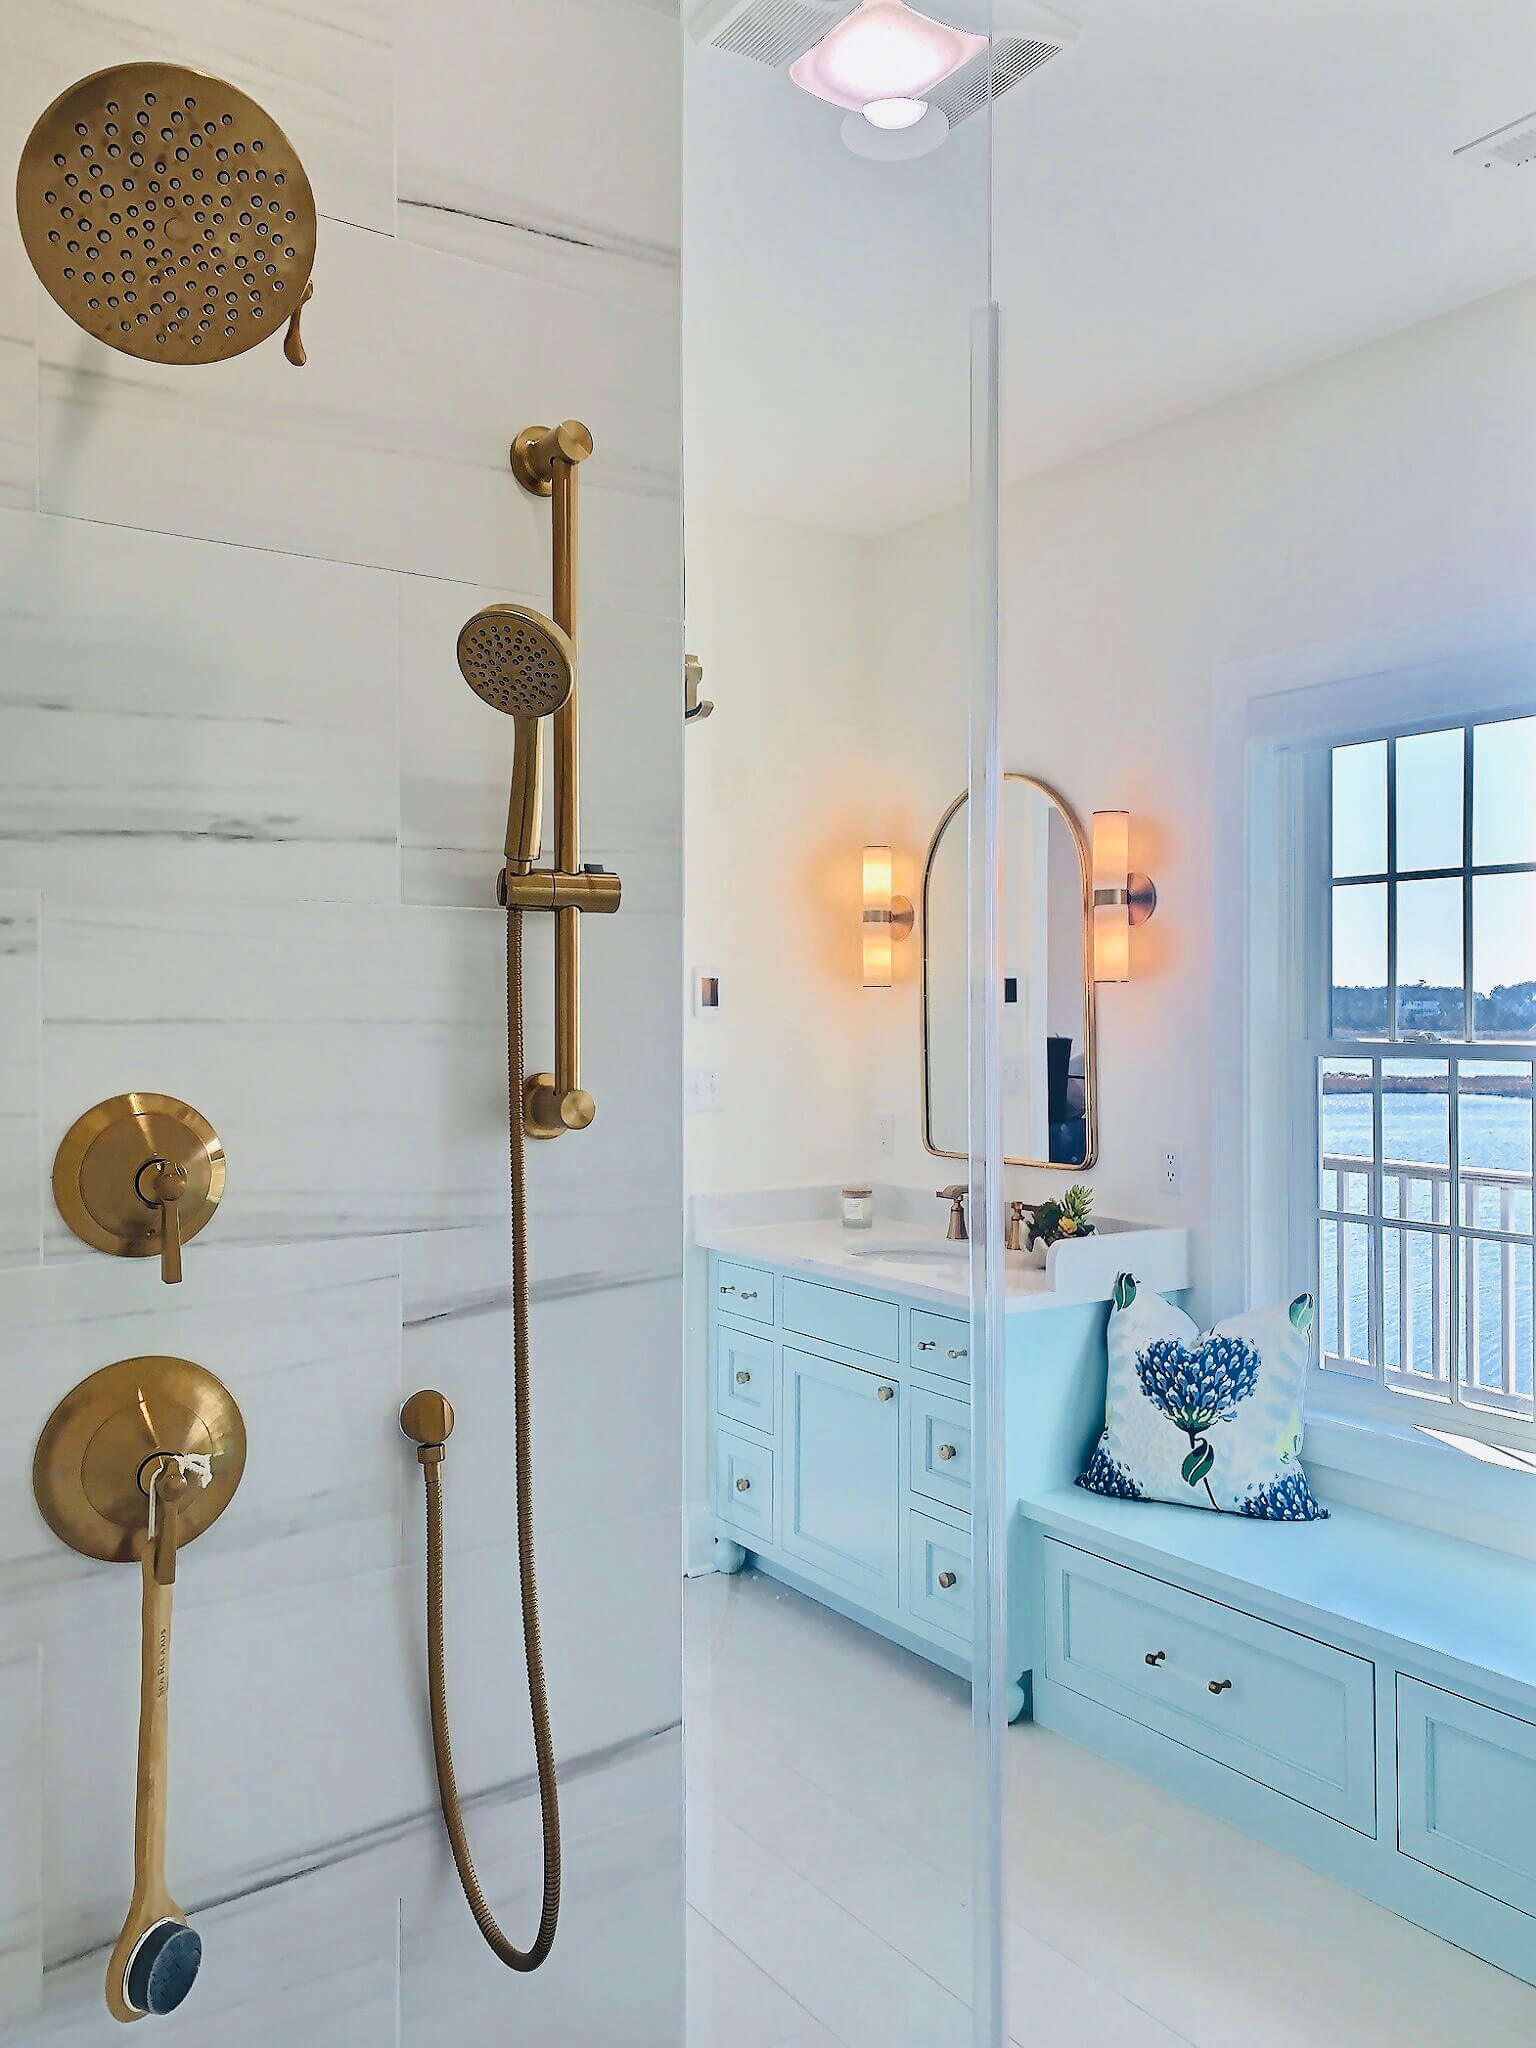 Bathroom design by Sea Light Design-Build Best Renovation on Pine Rd in Selbyville DE